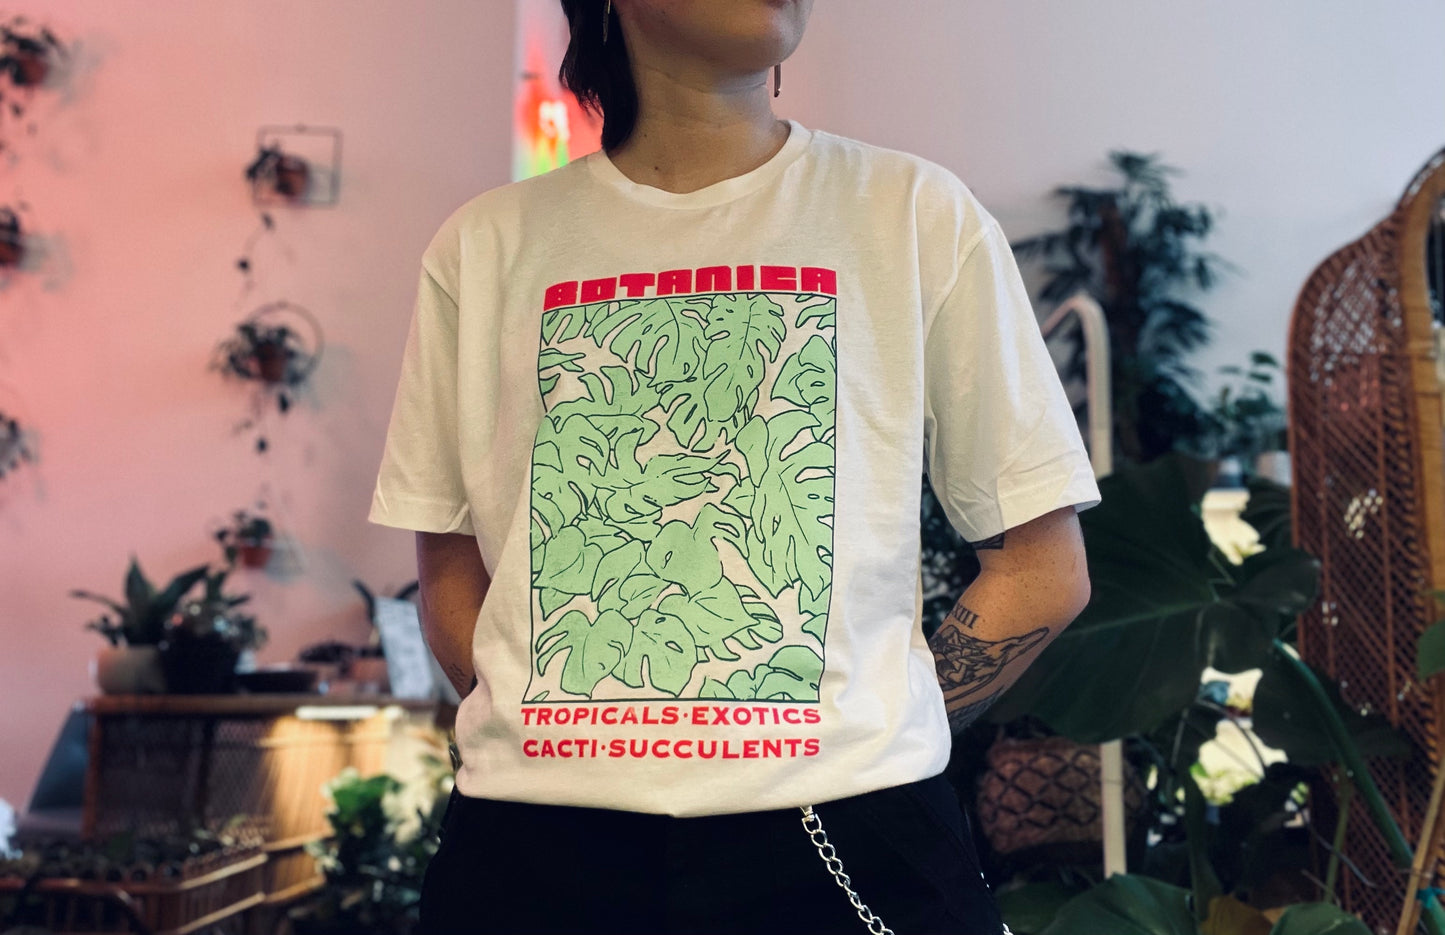 Botanica Monstera T-shirt (multiple colors)